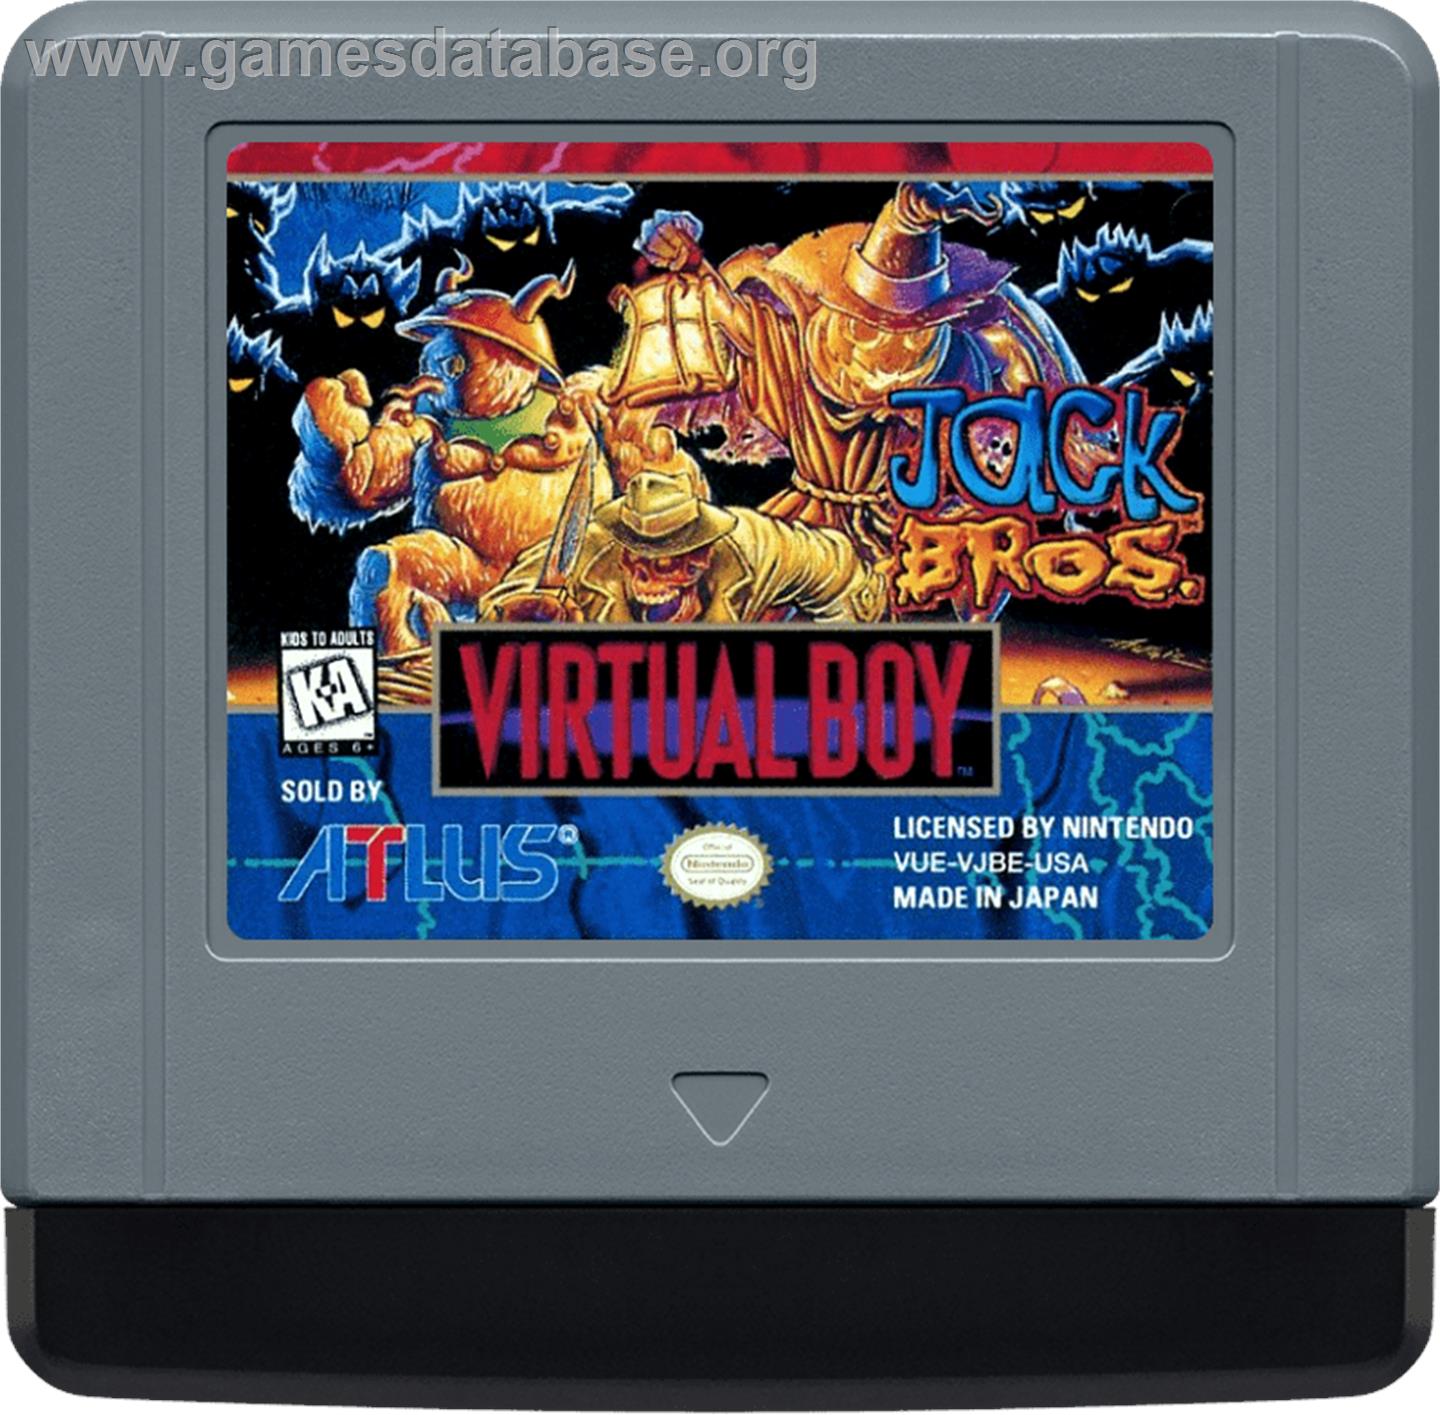 Jack Bros. - Nintendo Virtual Boy - Artwork - Cartridge